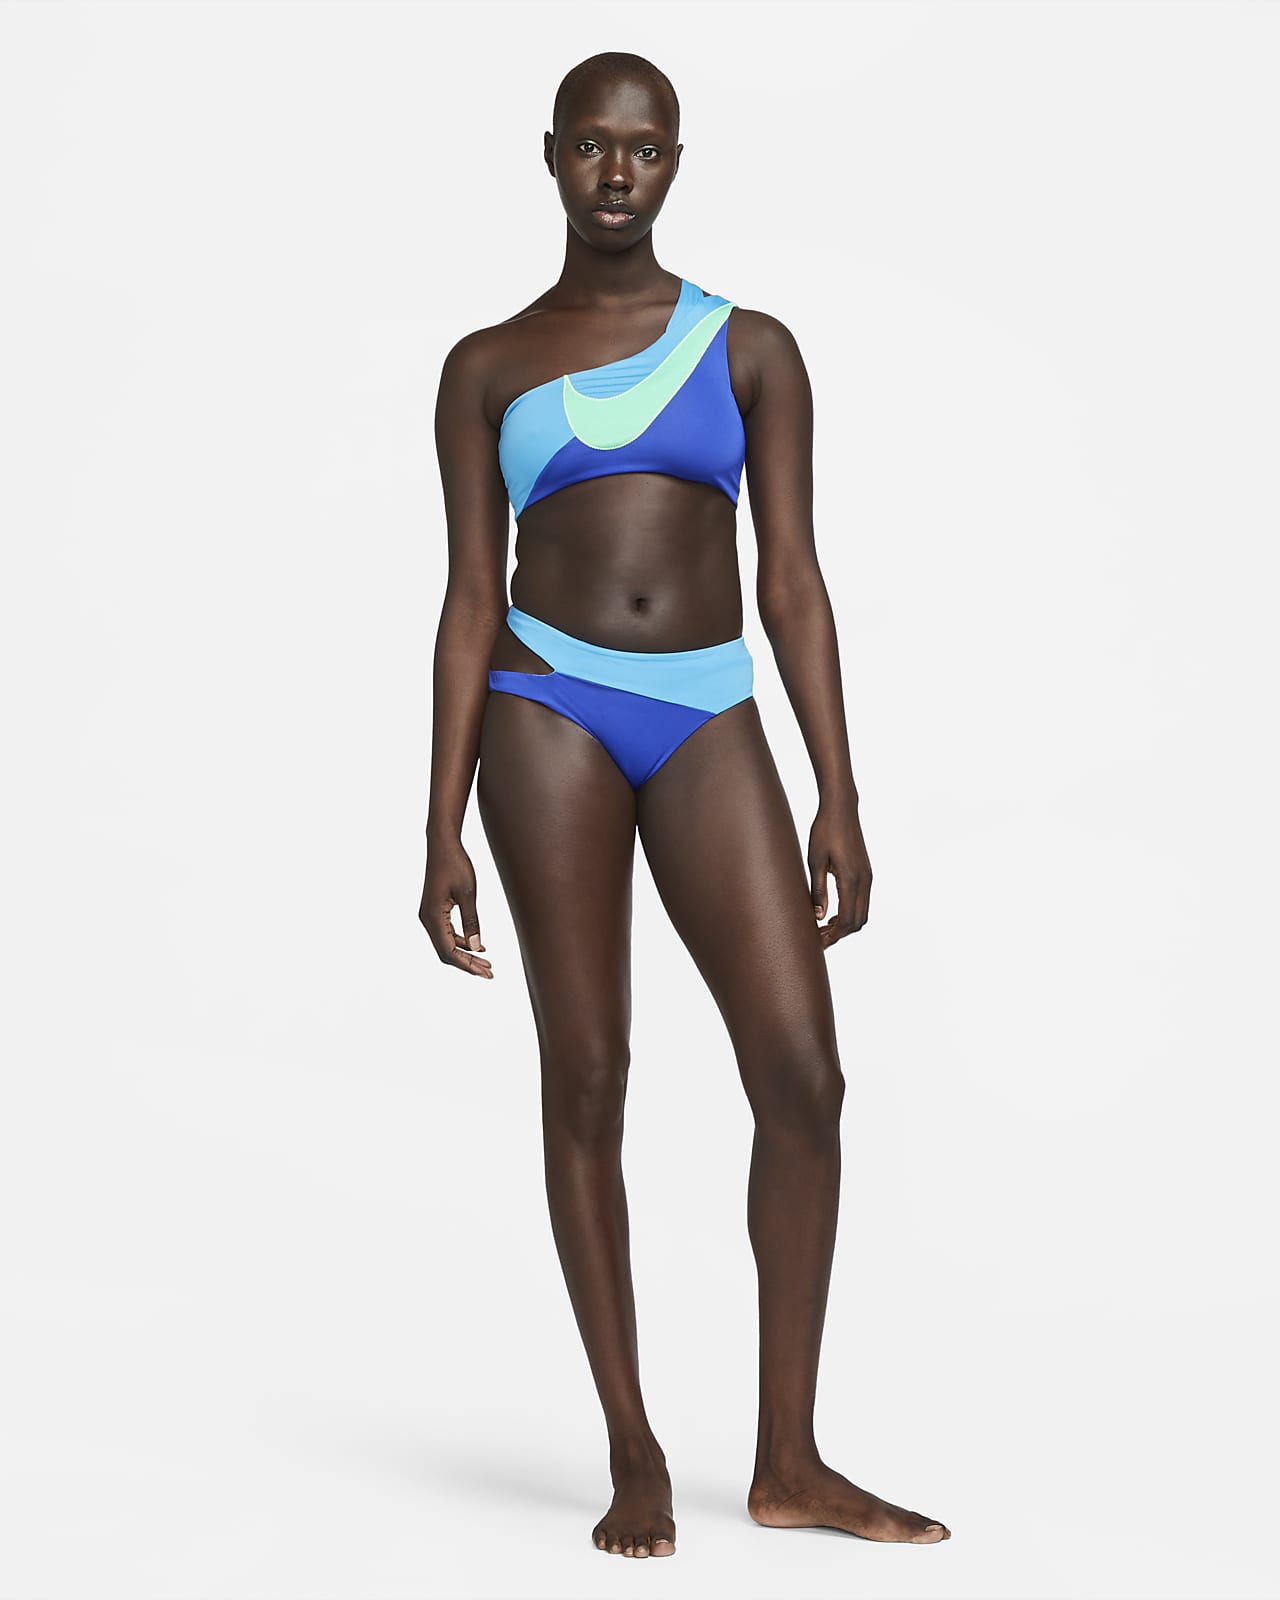 Nike Women's Bikini Swim Bottom.